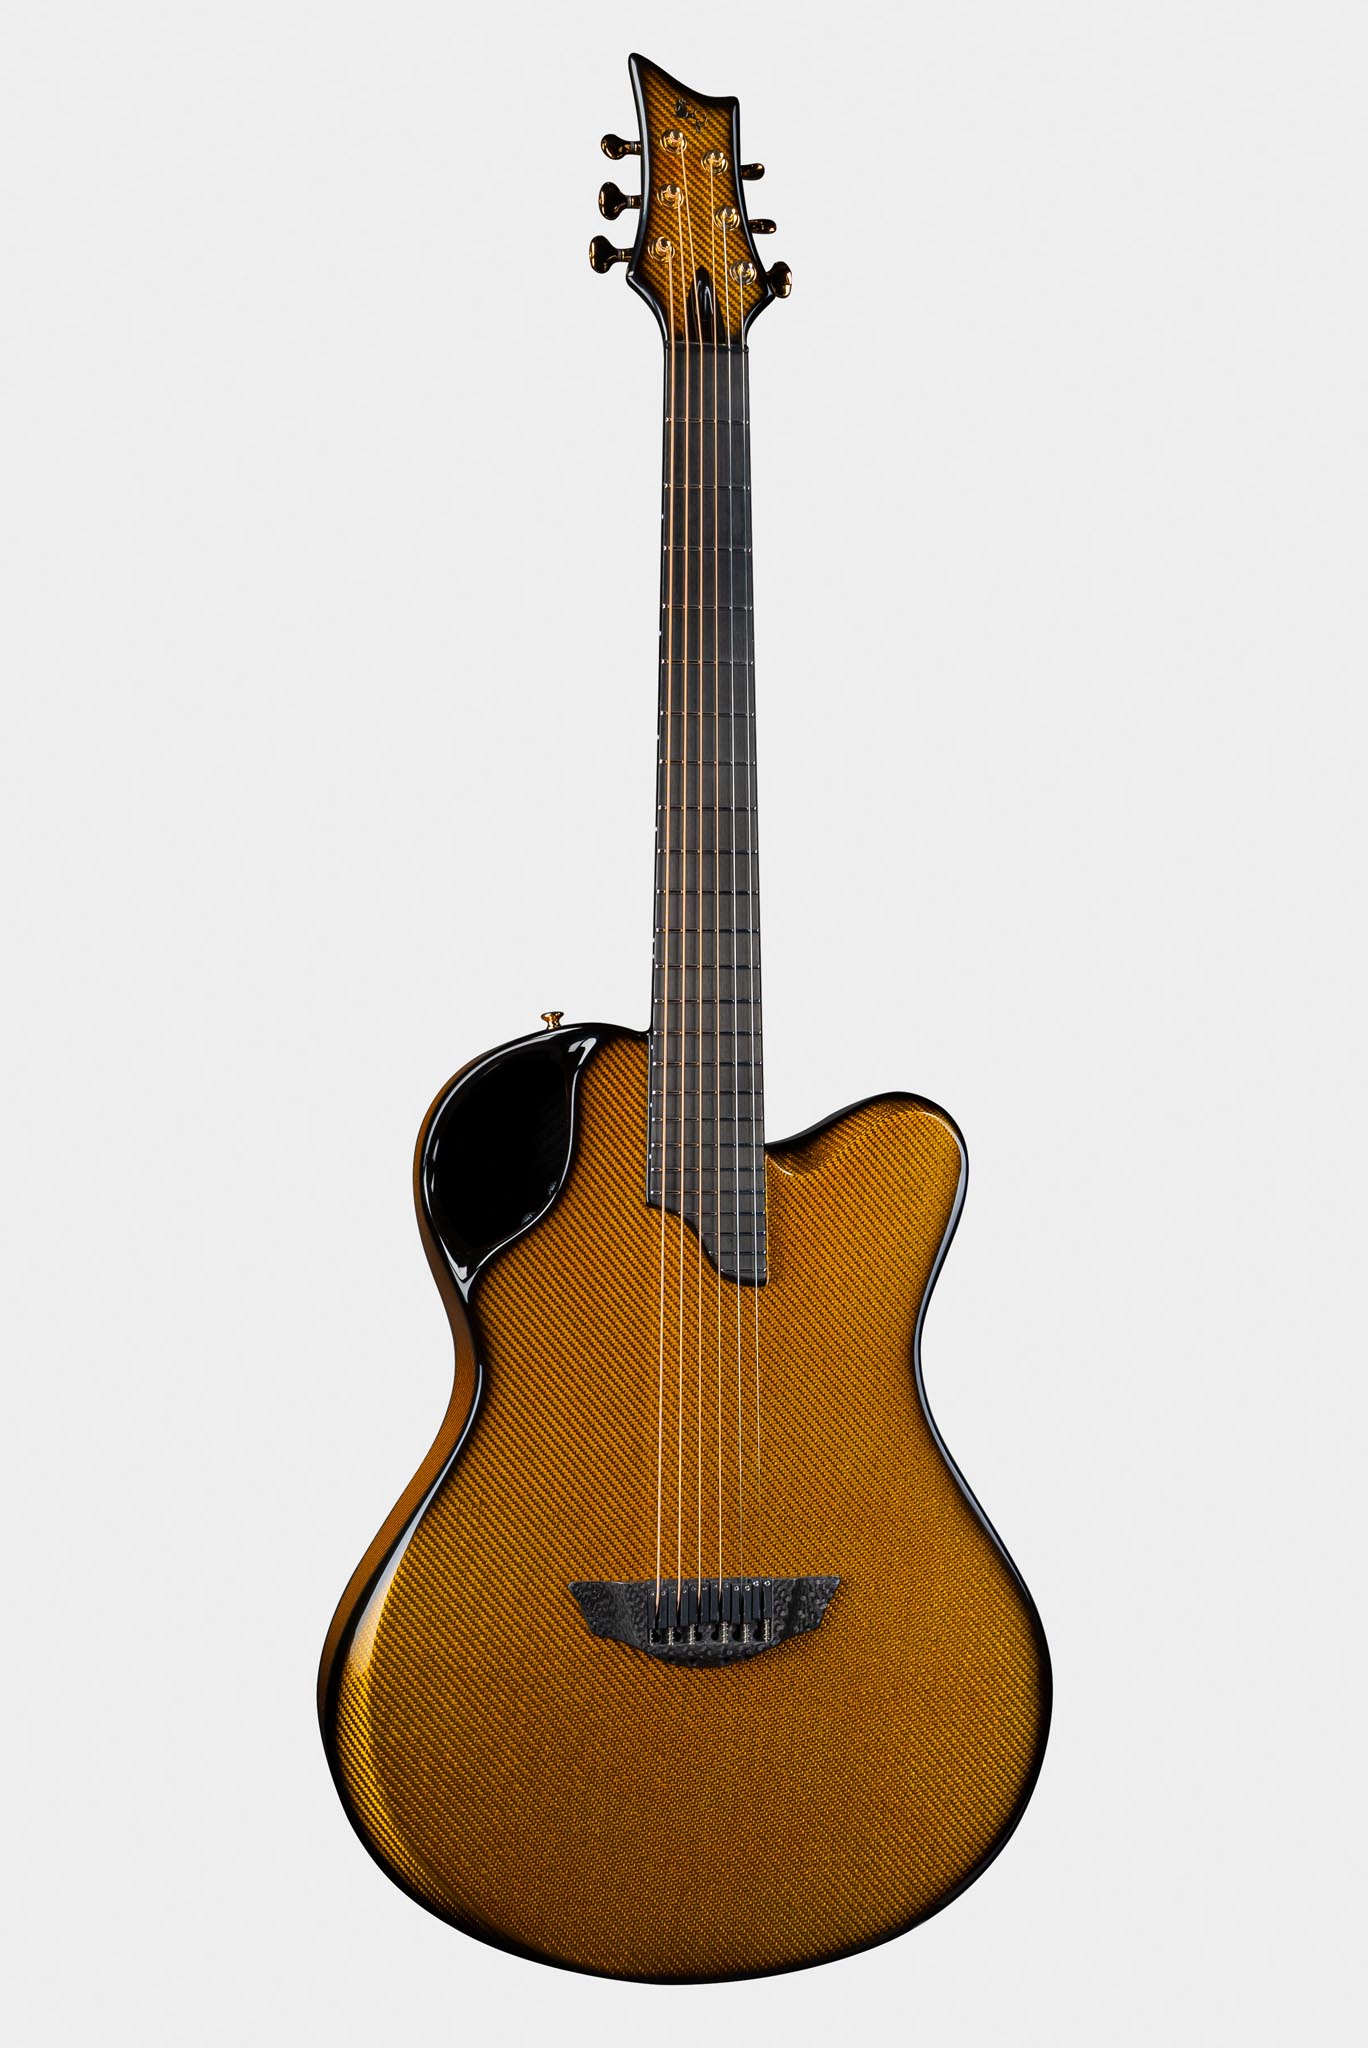 Emerald Guitars X20 model featuring a honey amber finish and carbon fiber texture